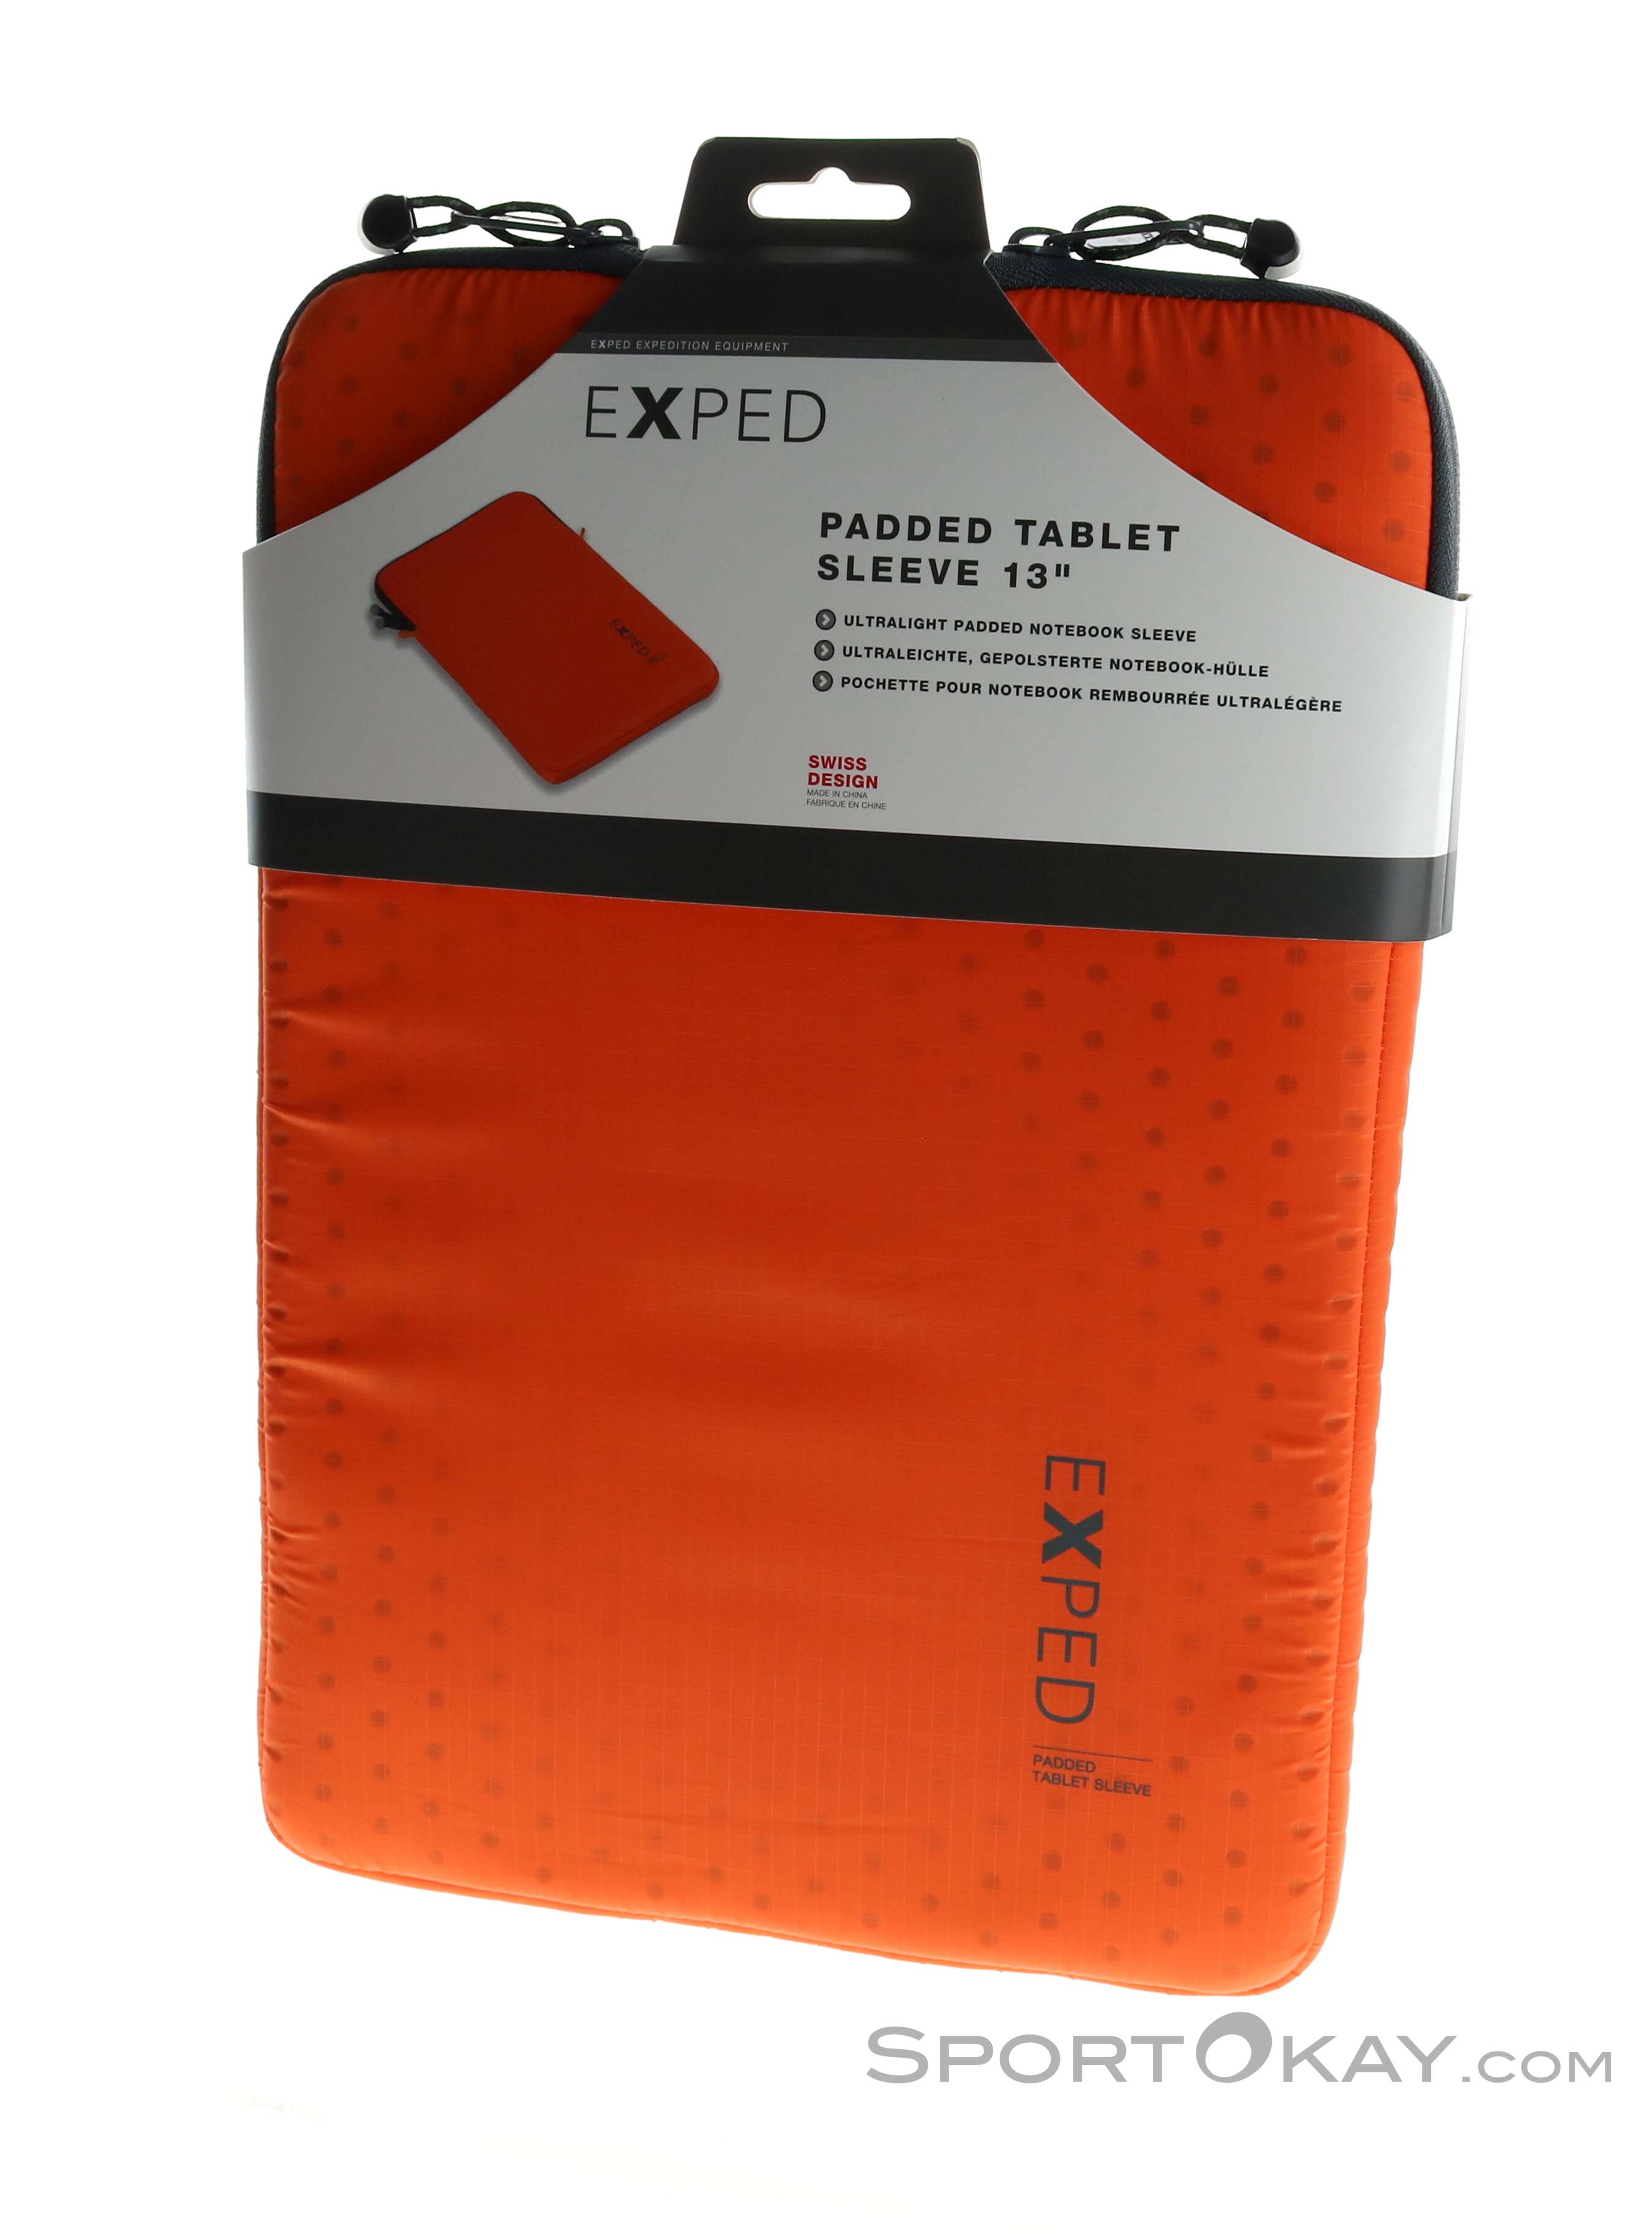 Exped Padded Tablet Sleeve 13” Borsa - Borse - Borse sportivi